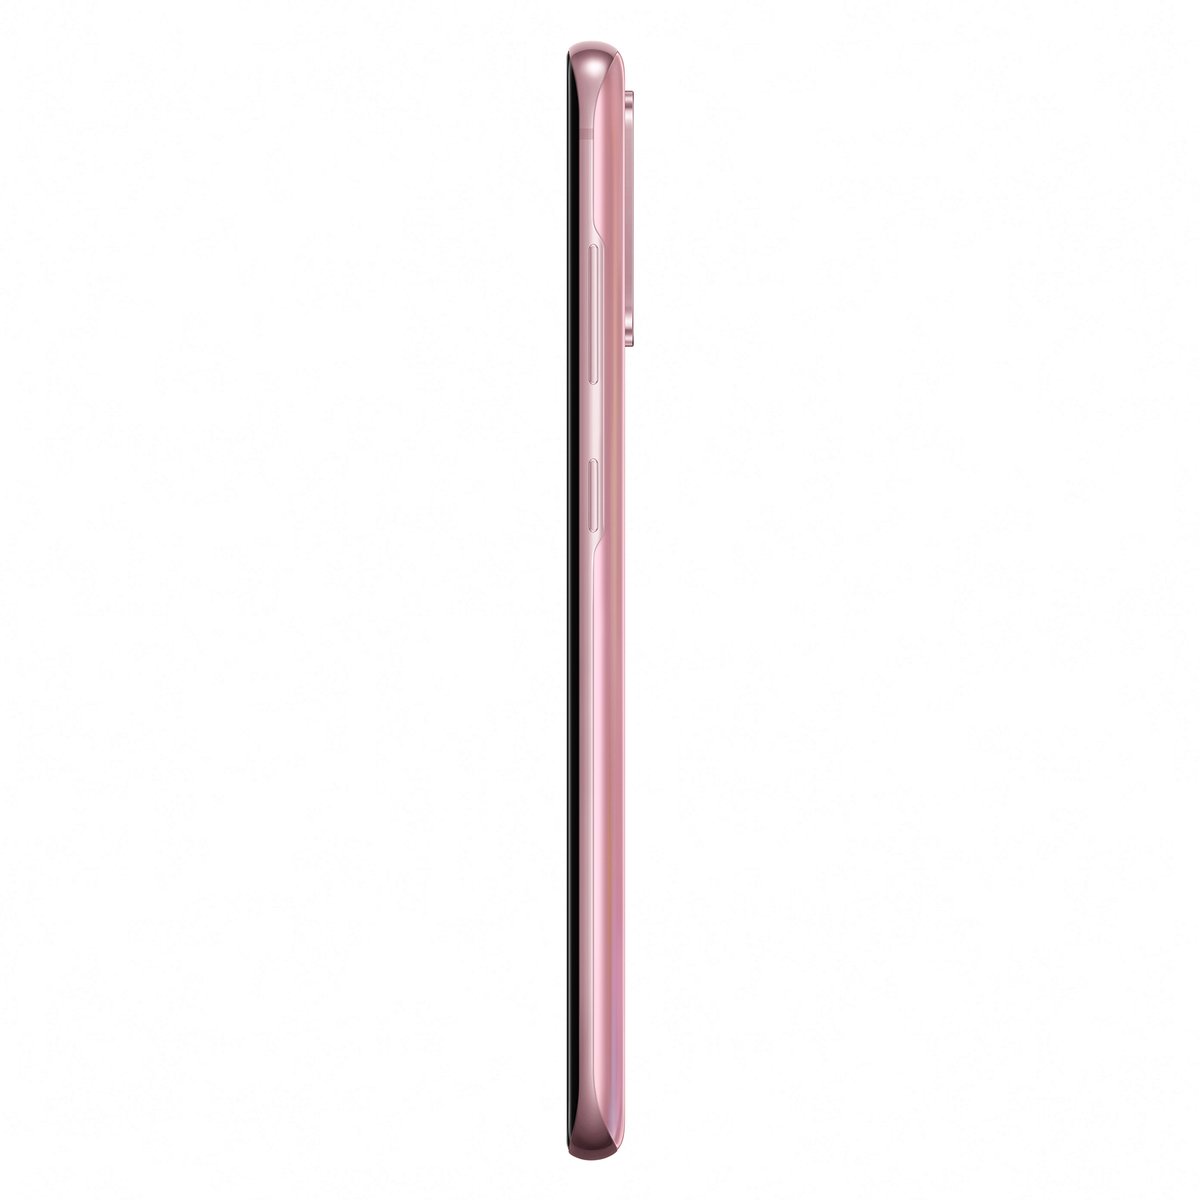 Samsung Galaxy S20 G980 128GB Cloud Pink